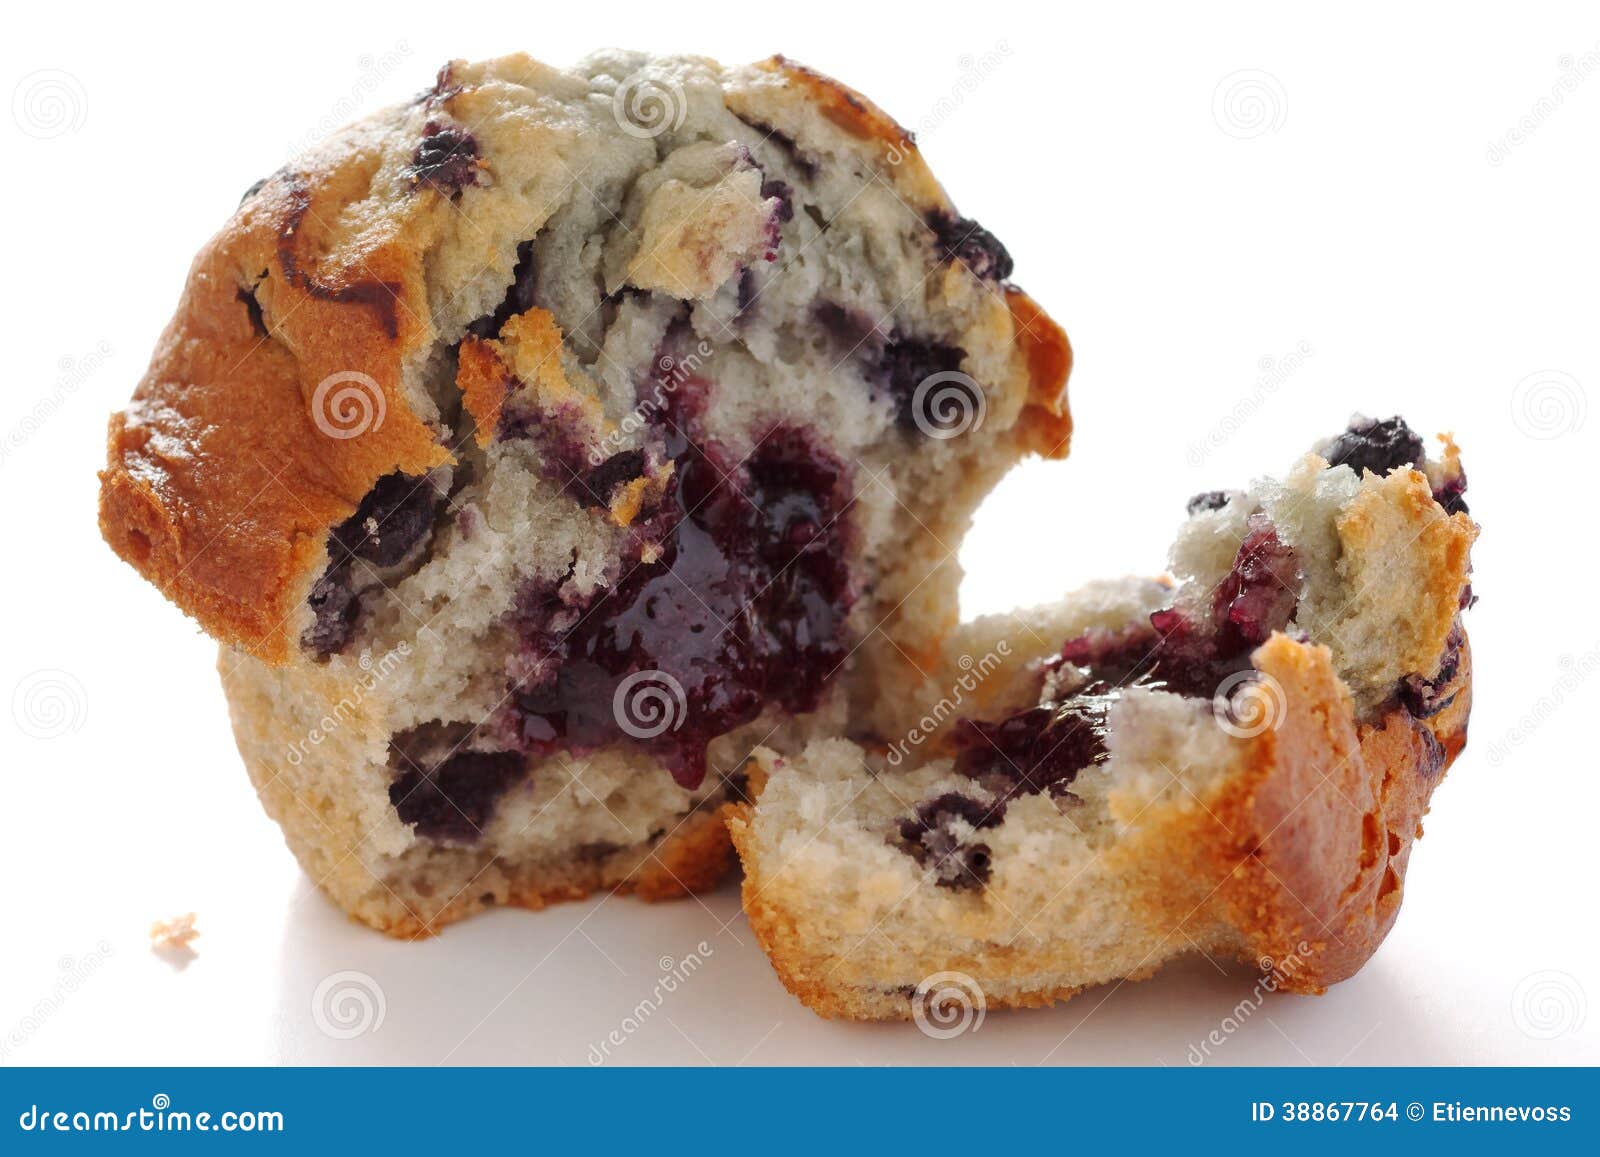 broken blueberry muffin